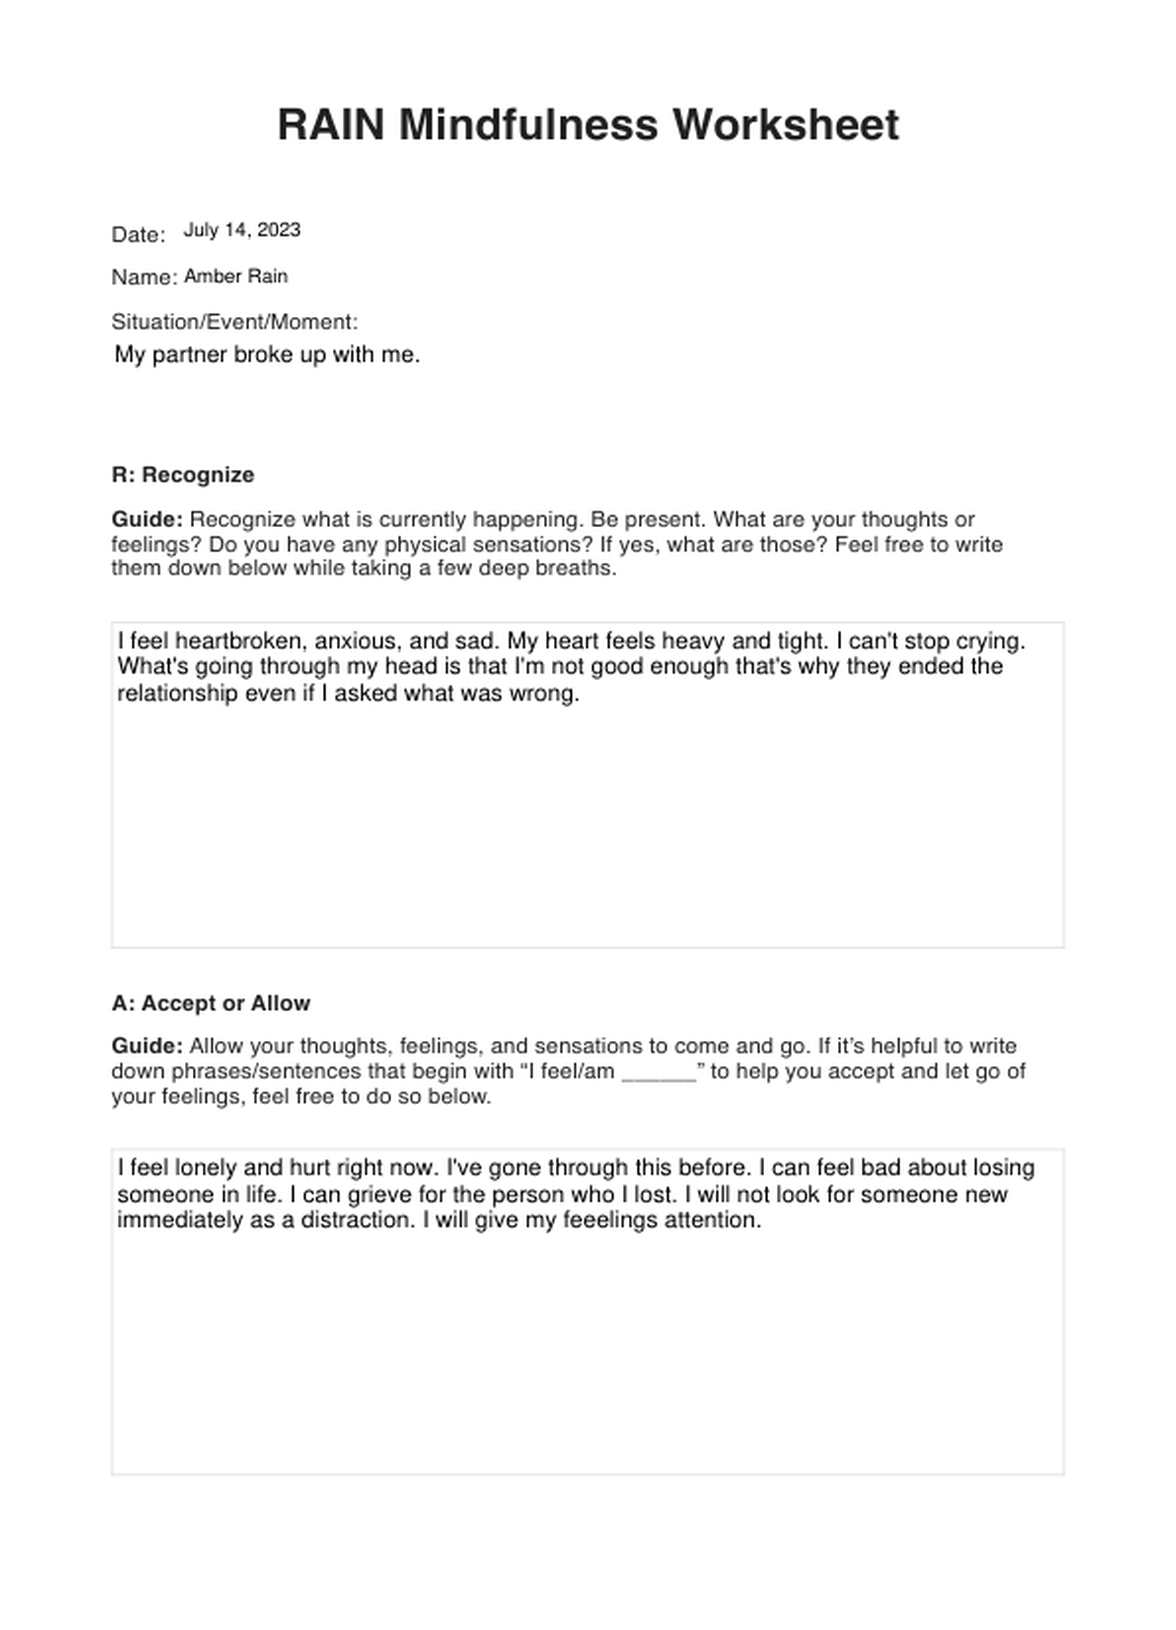 Rain Mindfulness Worksheet PDF Example